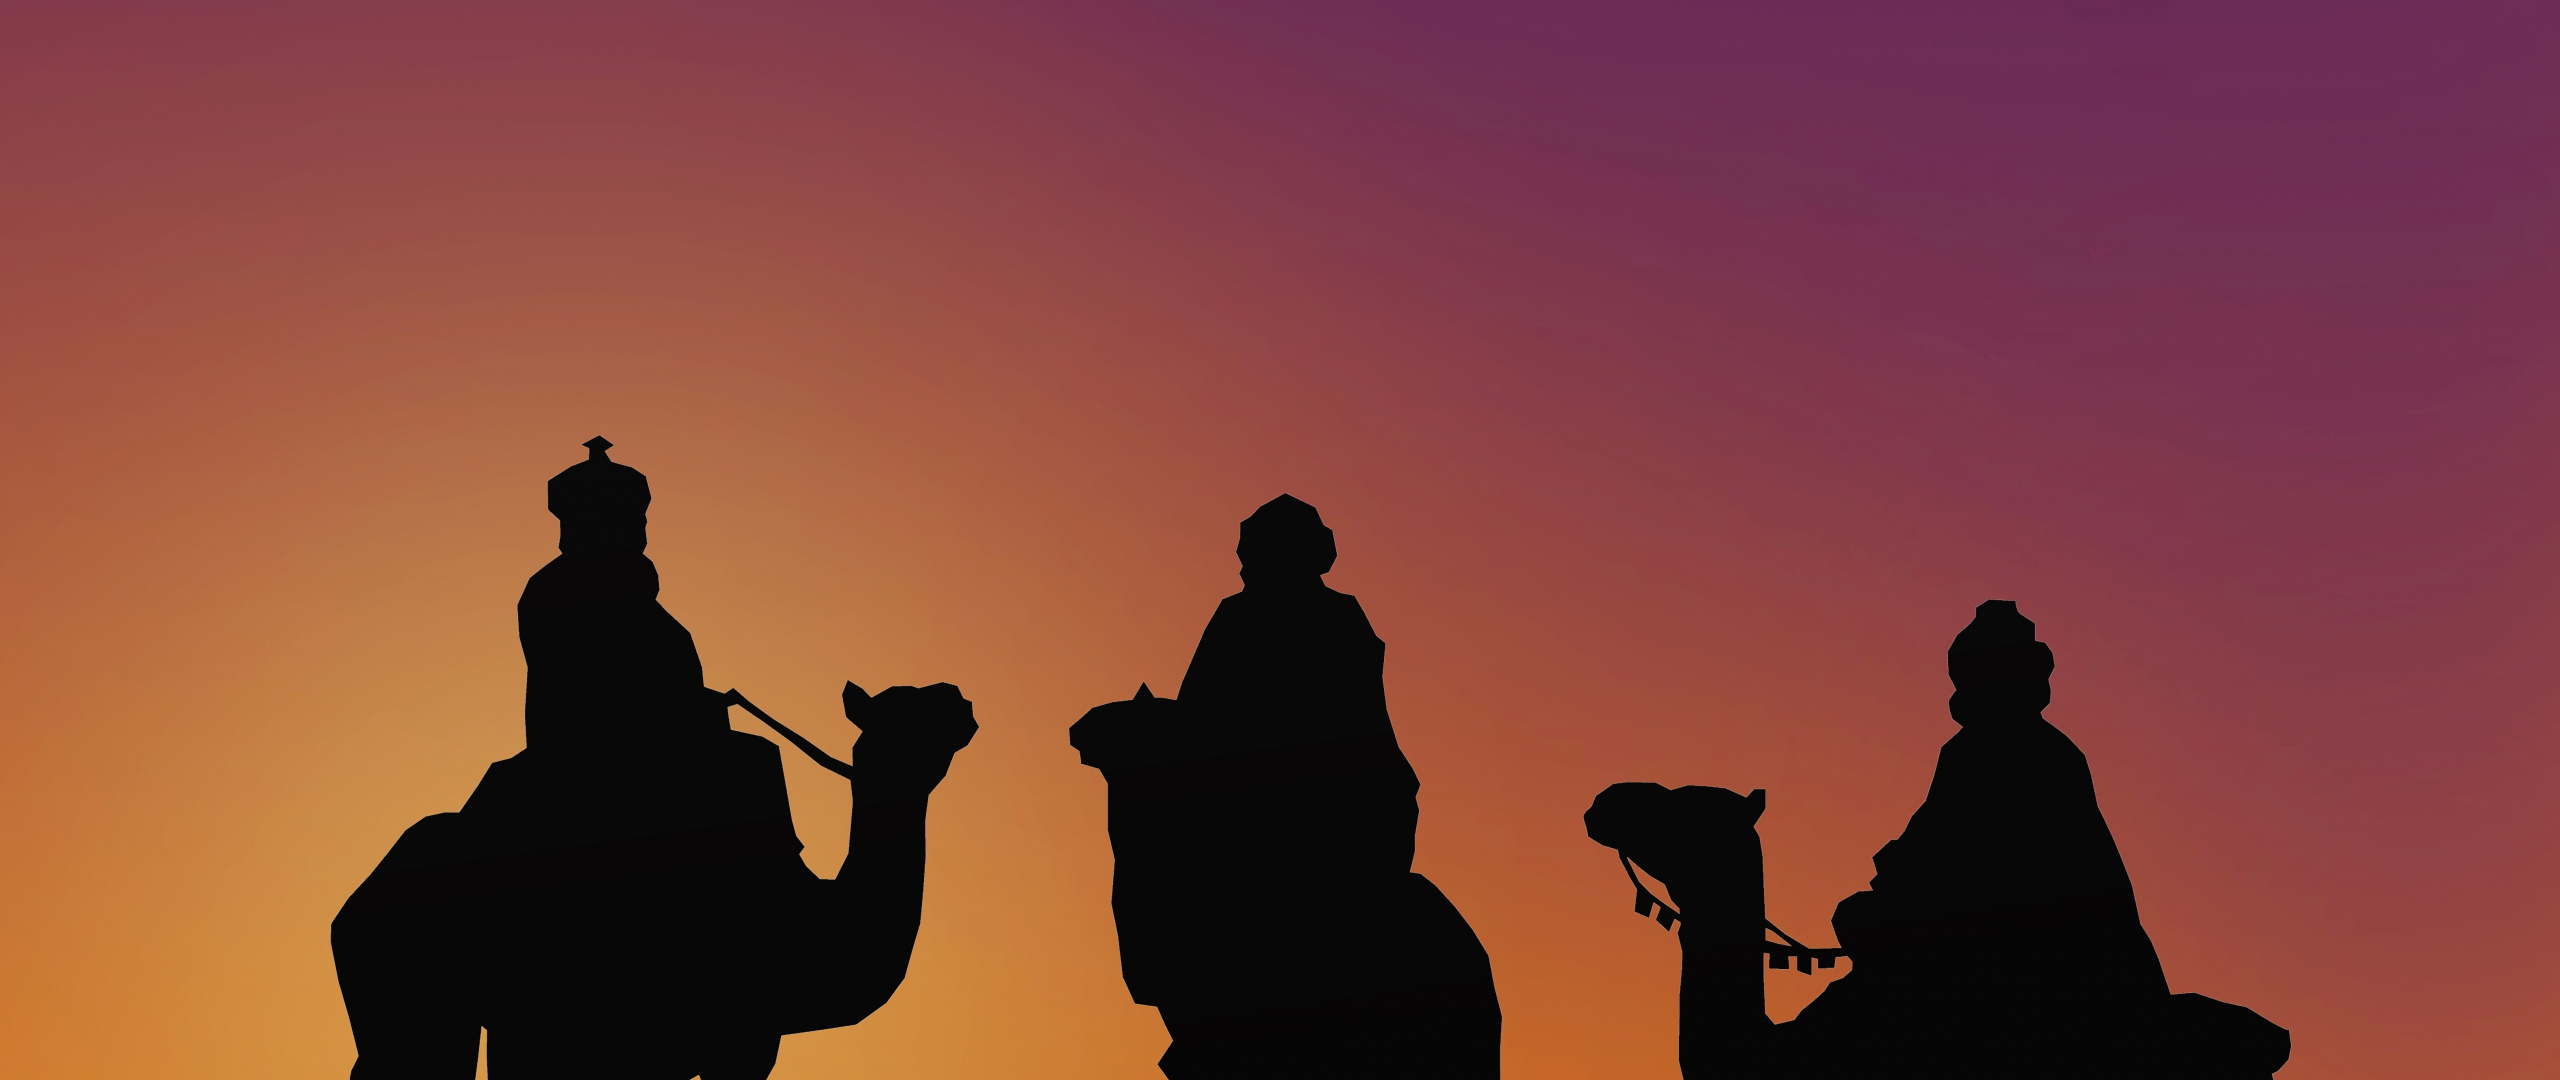 Epiphany, camel, silhouette, minimal, 2560x1080 wallpaper